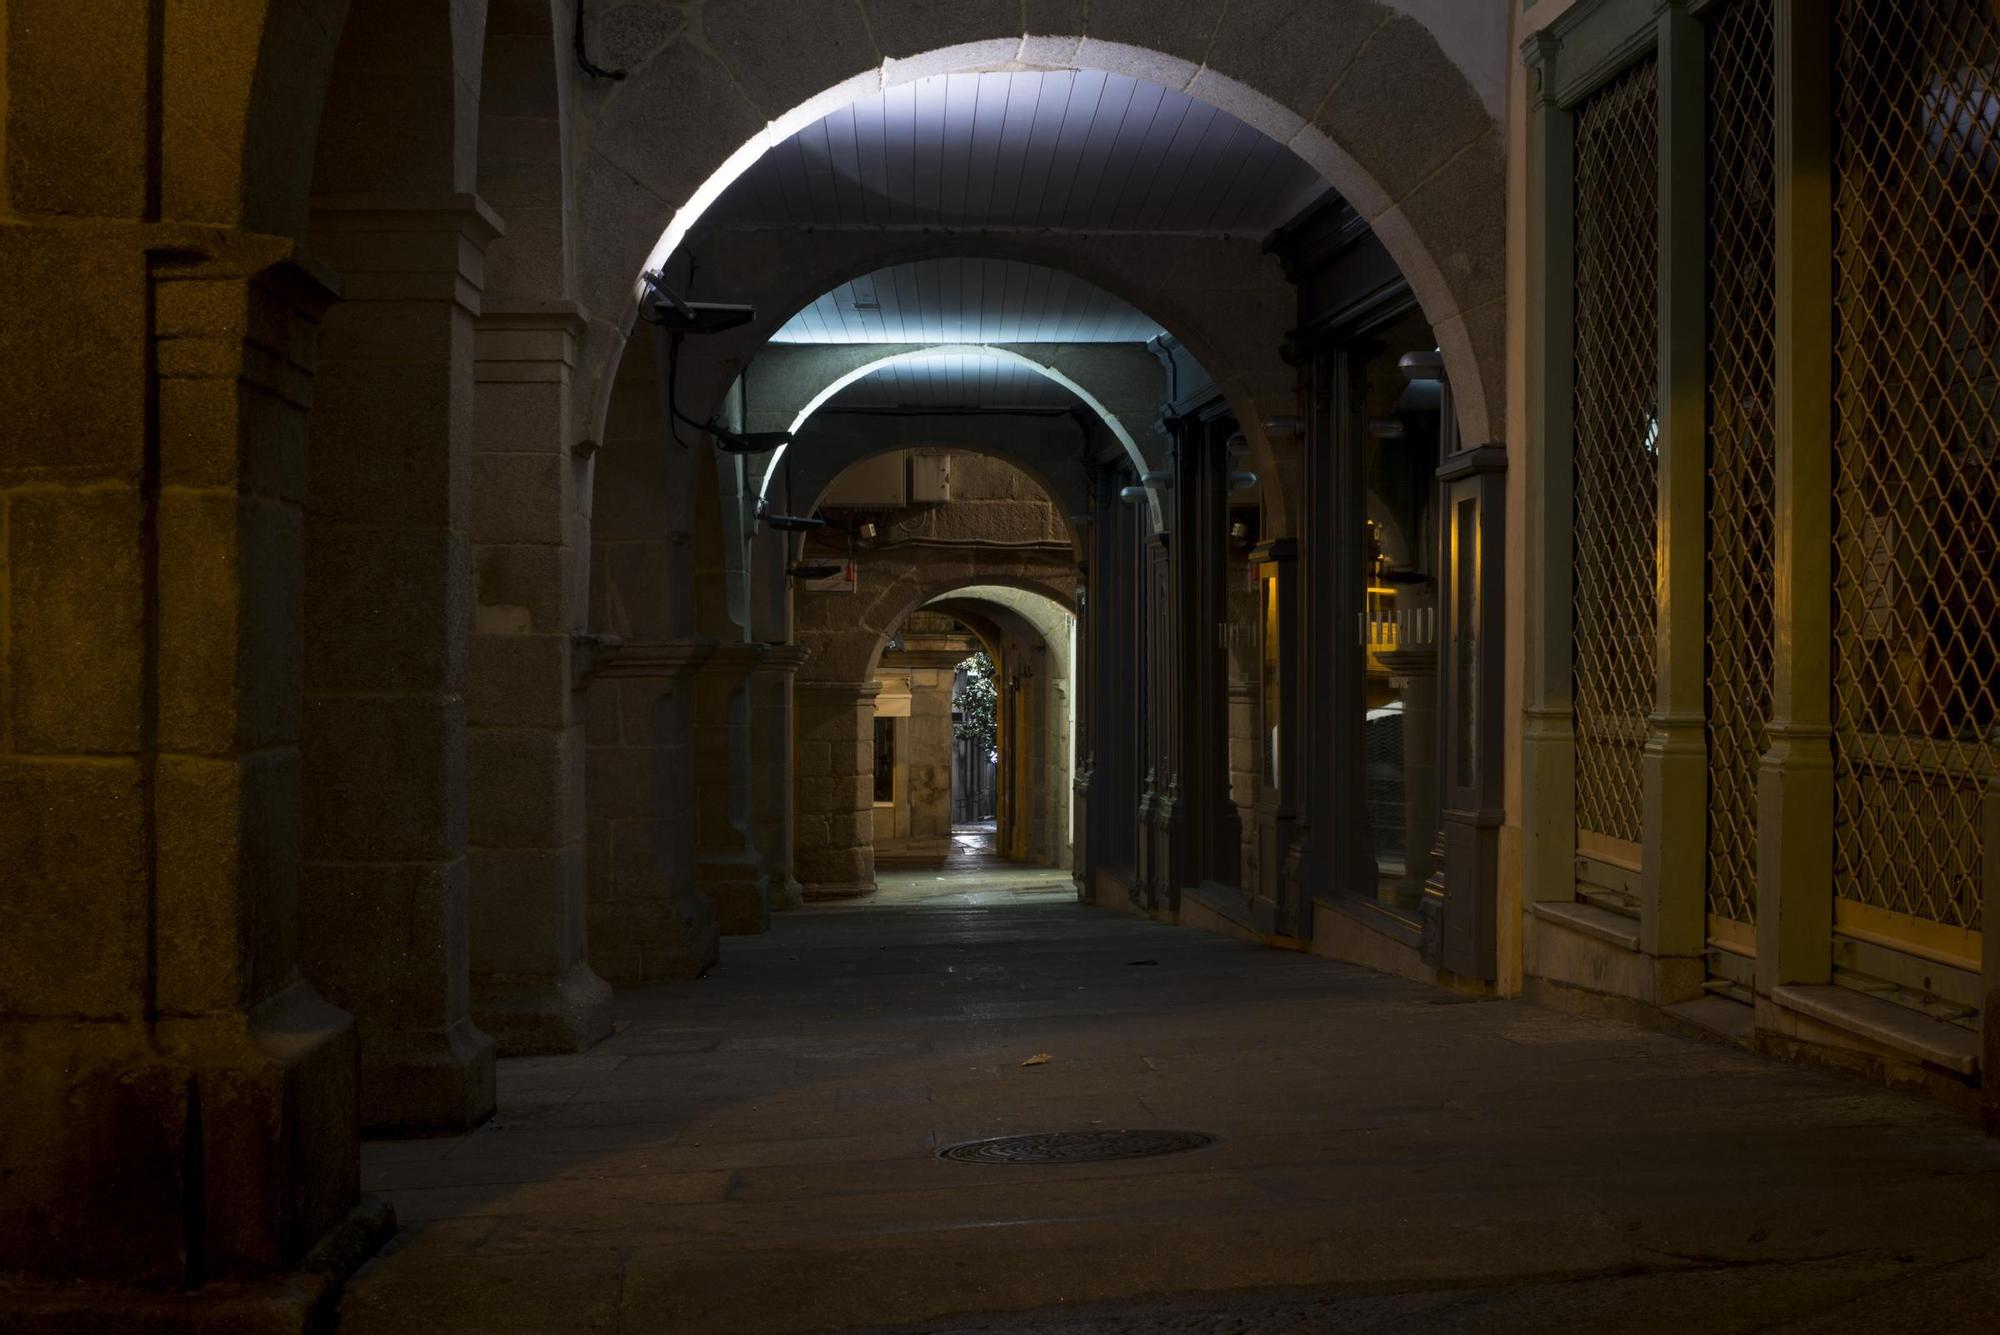 Así estaban las calles de Ourense este lunes.